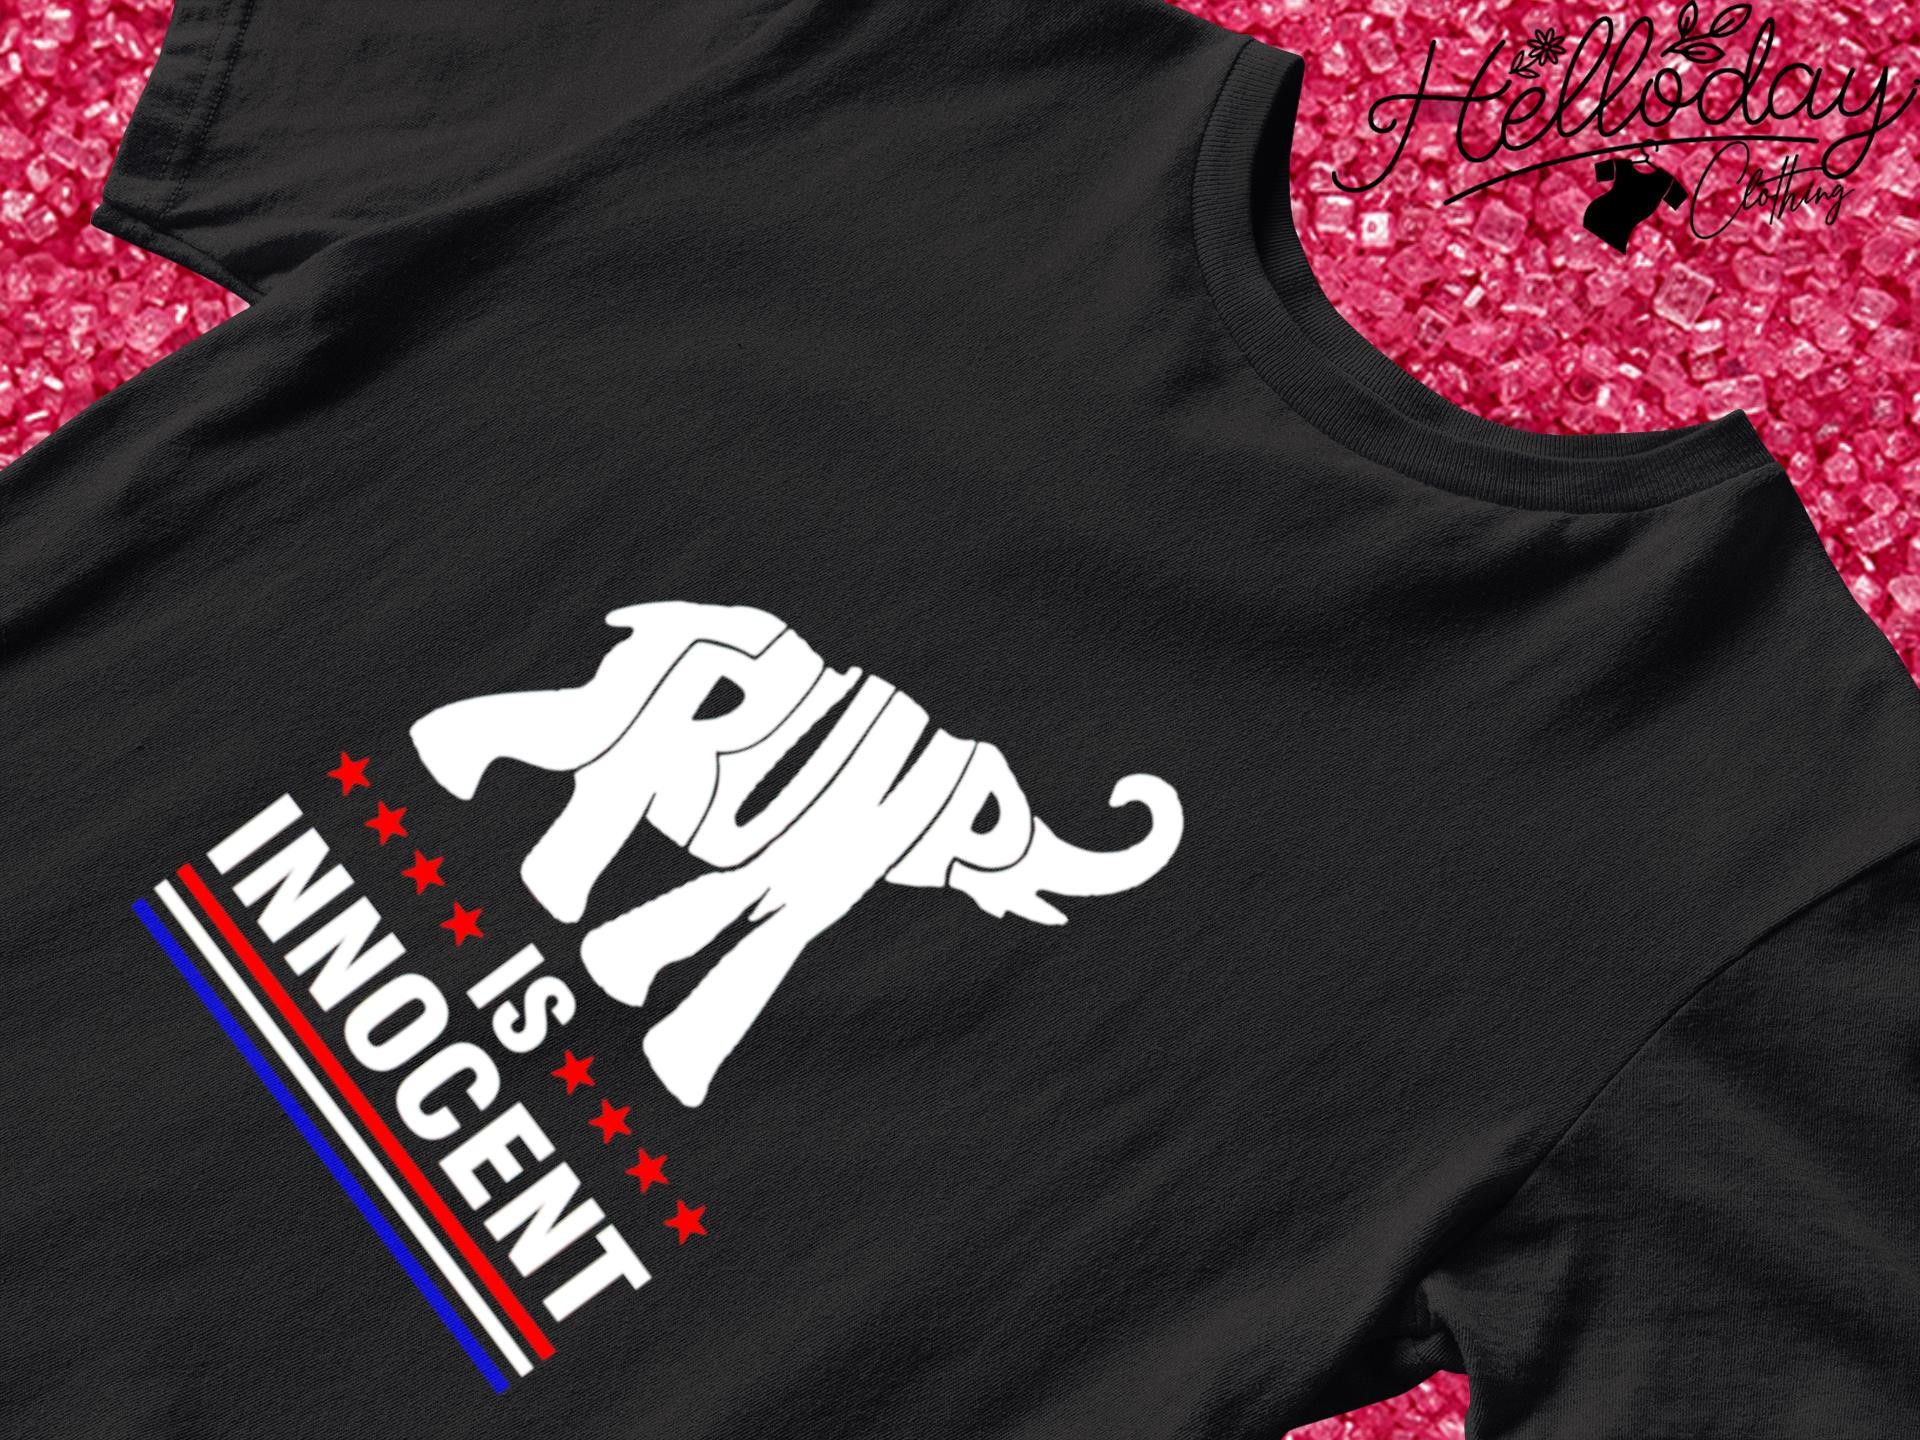 Elephant Trump is Innocent shirt